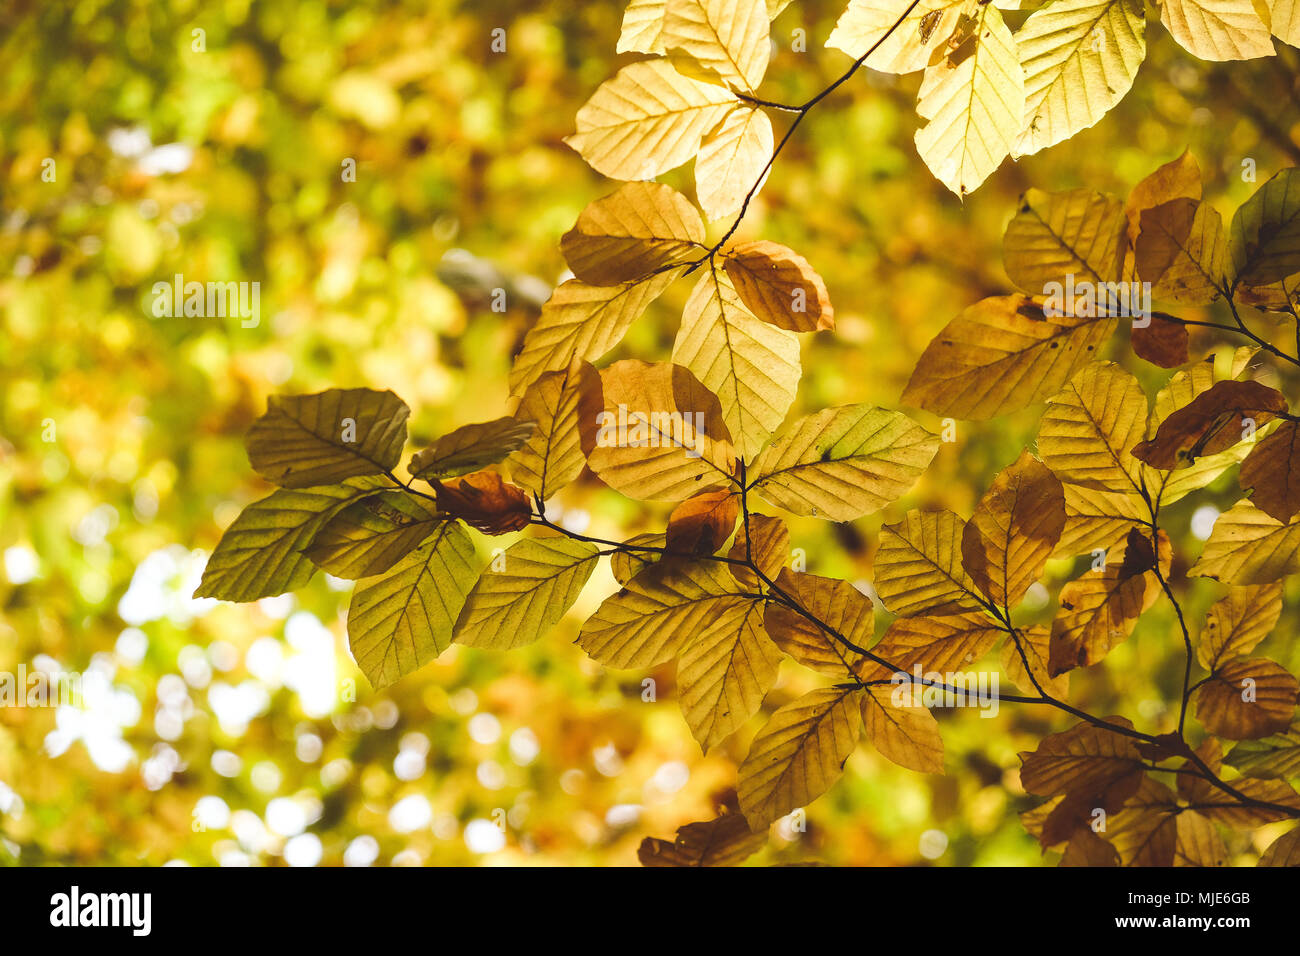 Golden autumn, sun shining through yellow beech leaves, close-up Stock Photo